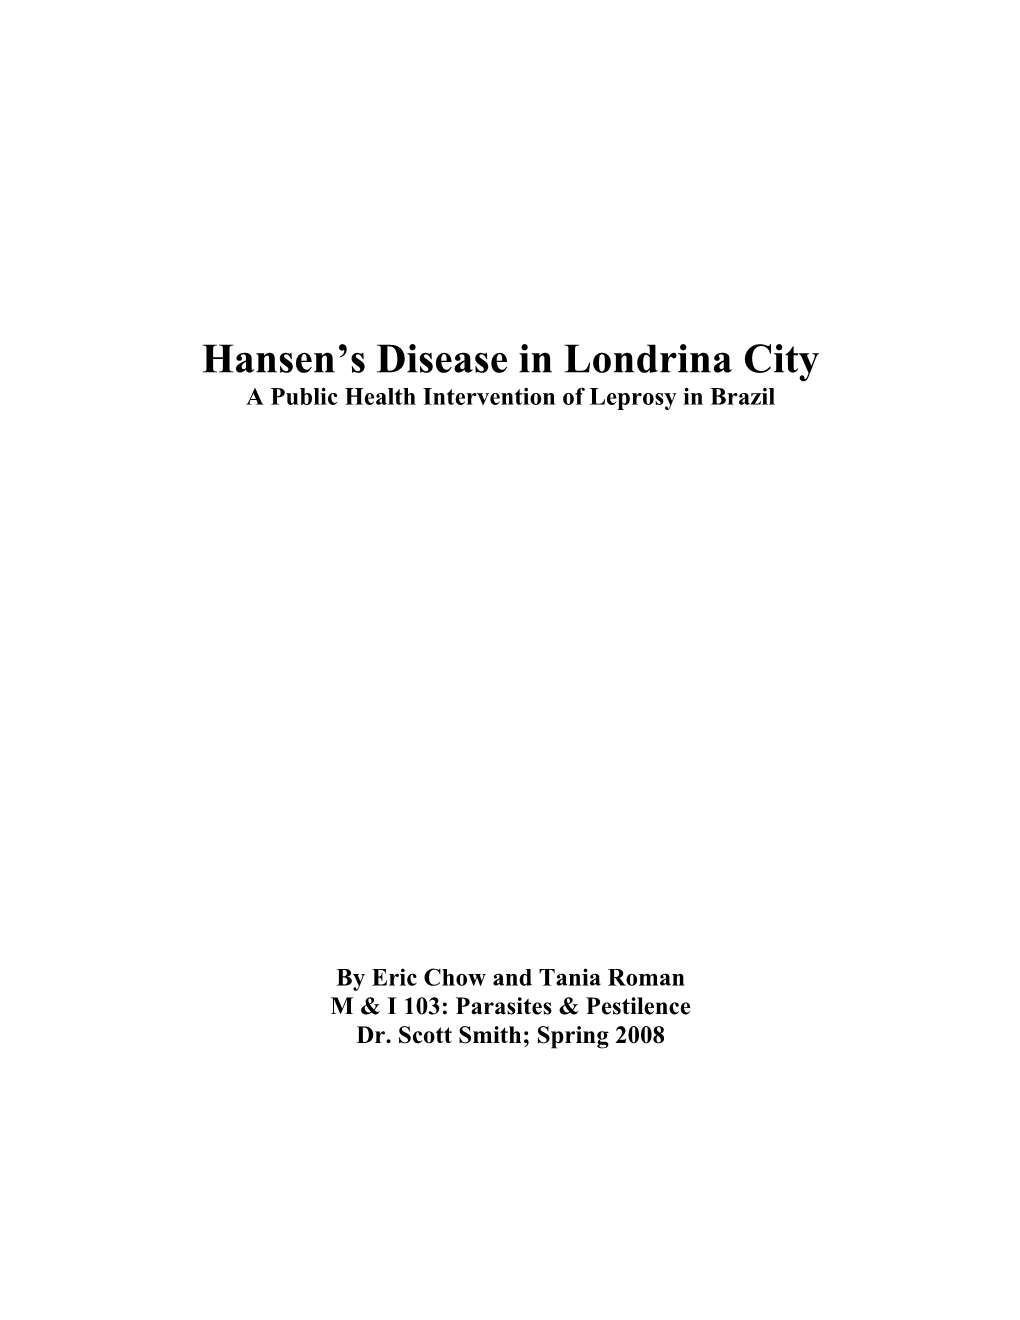 Hansen S Disease in Londrina City